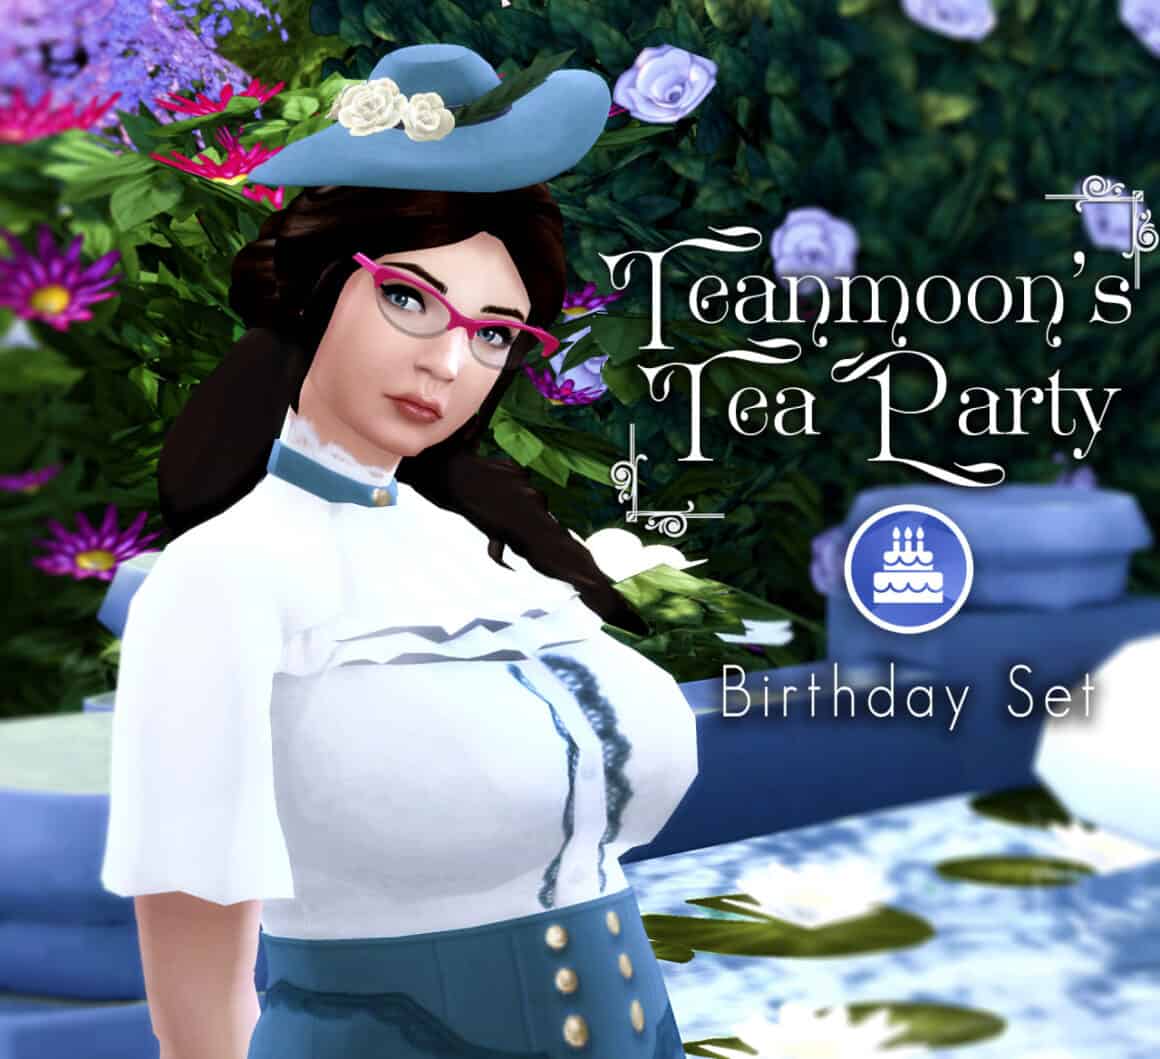 Teanmoon’s Tea Party